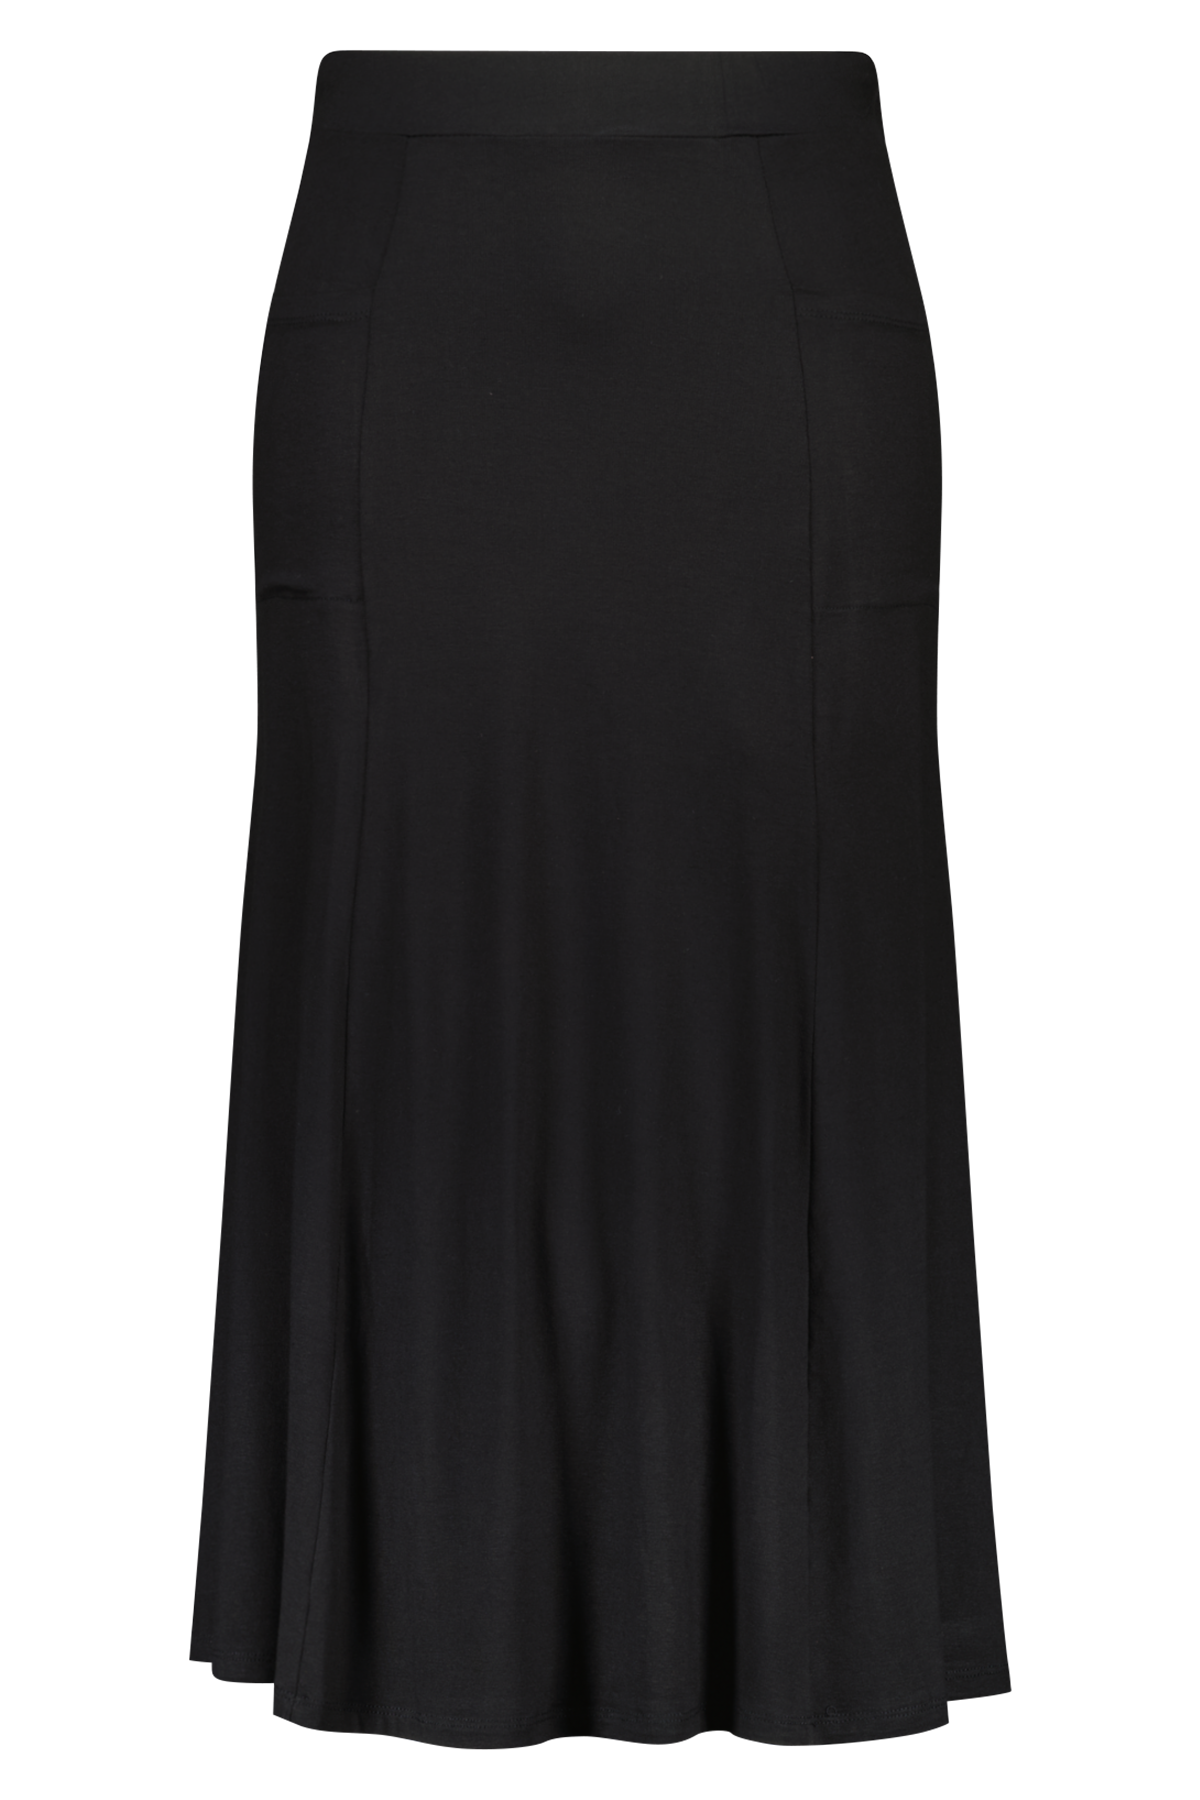 Dames Lange rok Multi zwart-wit bij MS Mode®